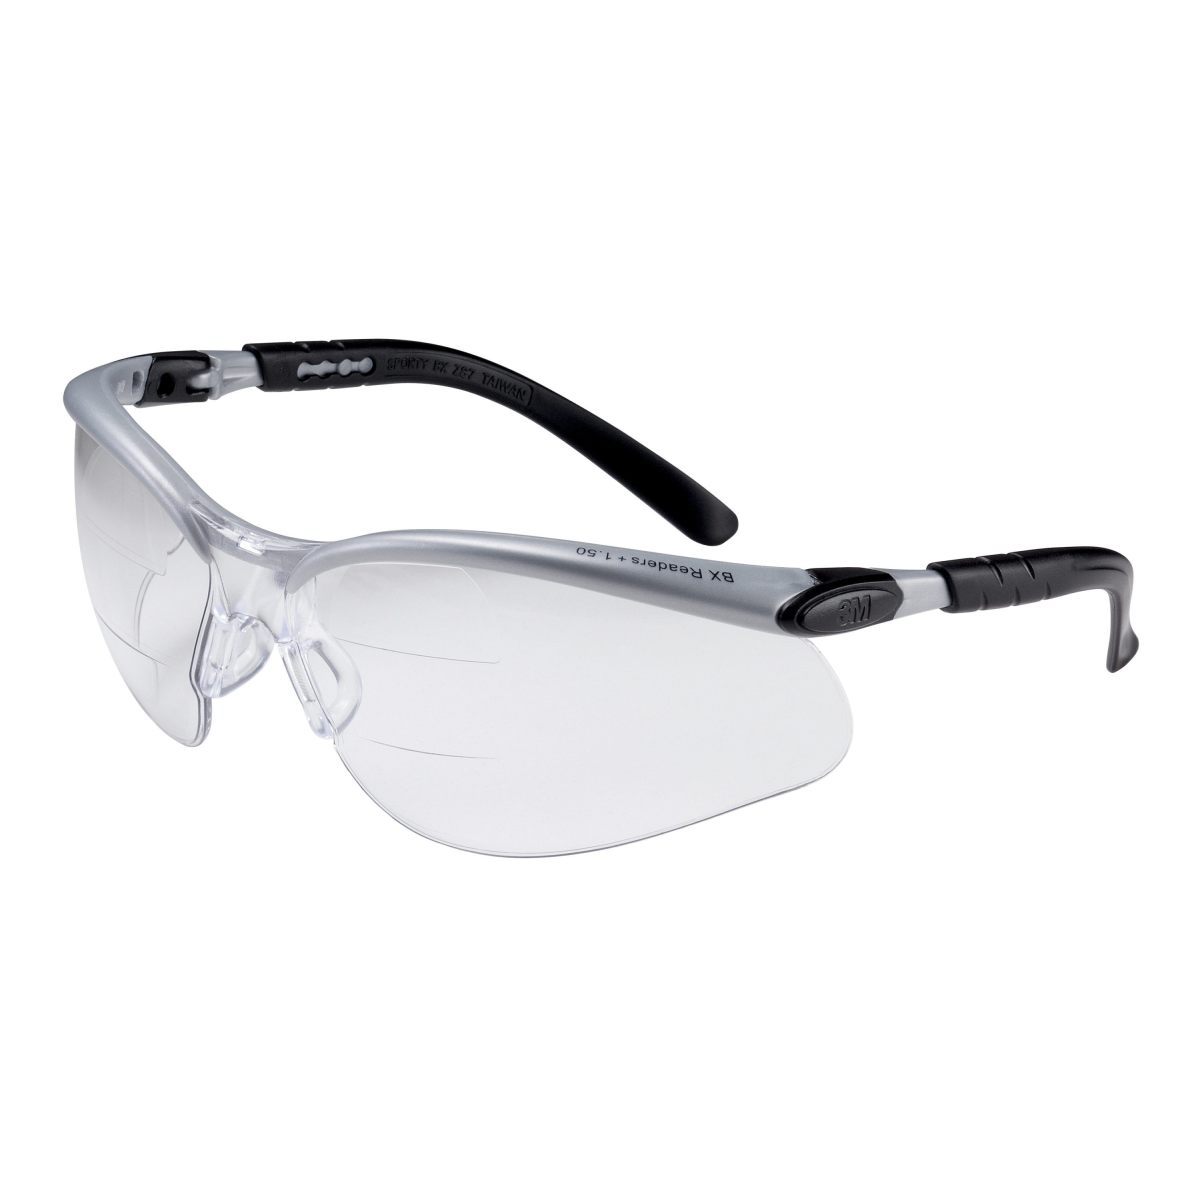 3M™ BX™ Dual Reader Protective Eyewear 11459-00000-20 Clear Anti-Fog Lens, Silver/Black Frame, +2.5 Top/Bottom Diopter (Availabi